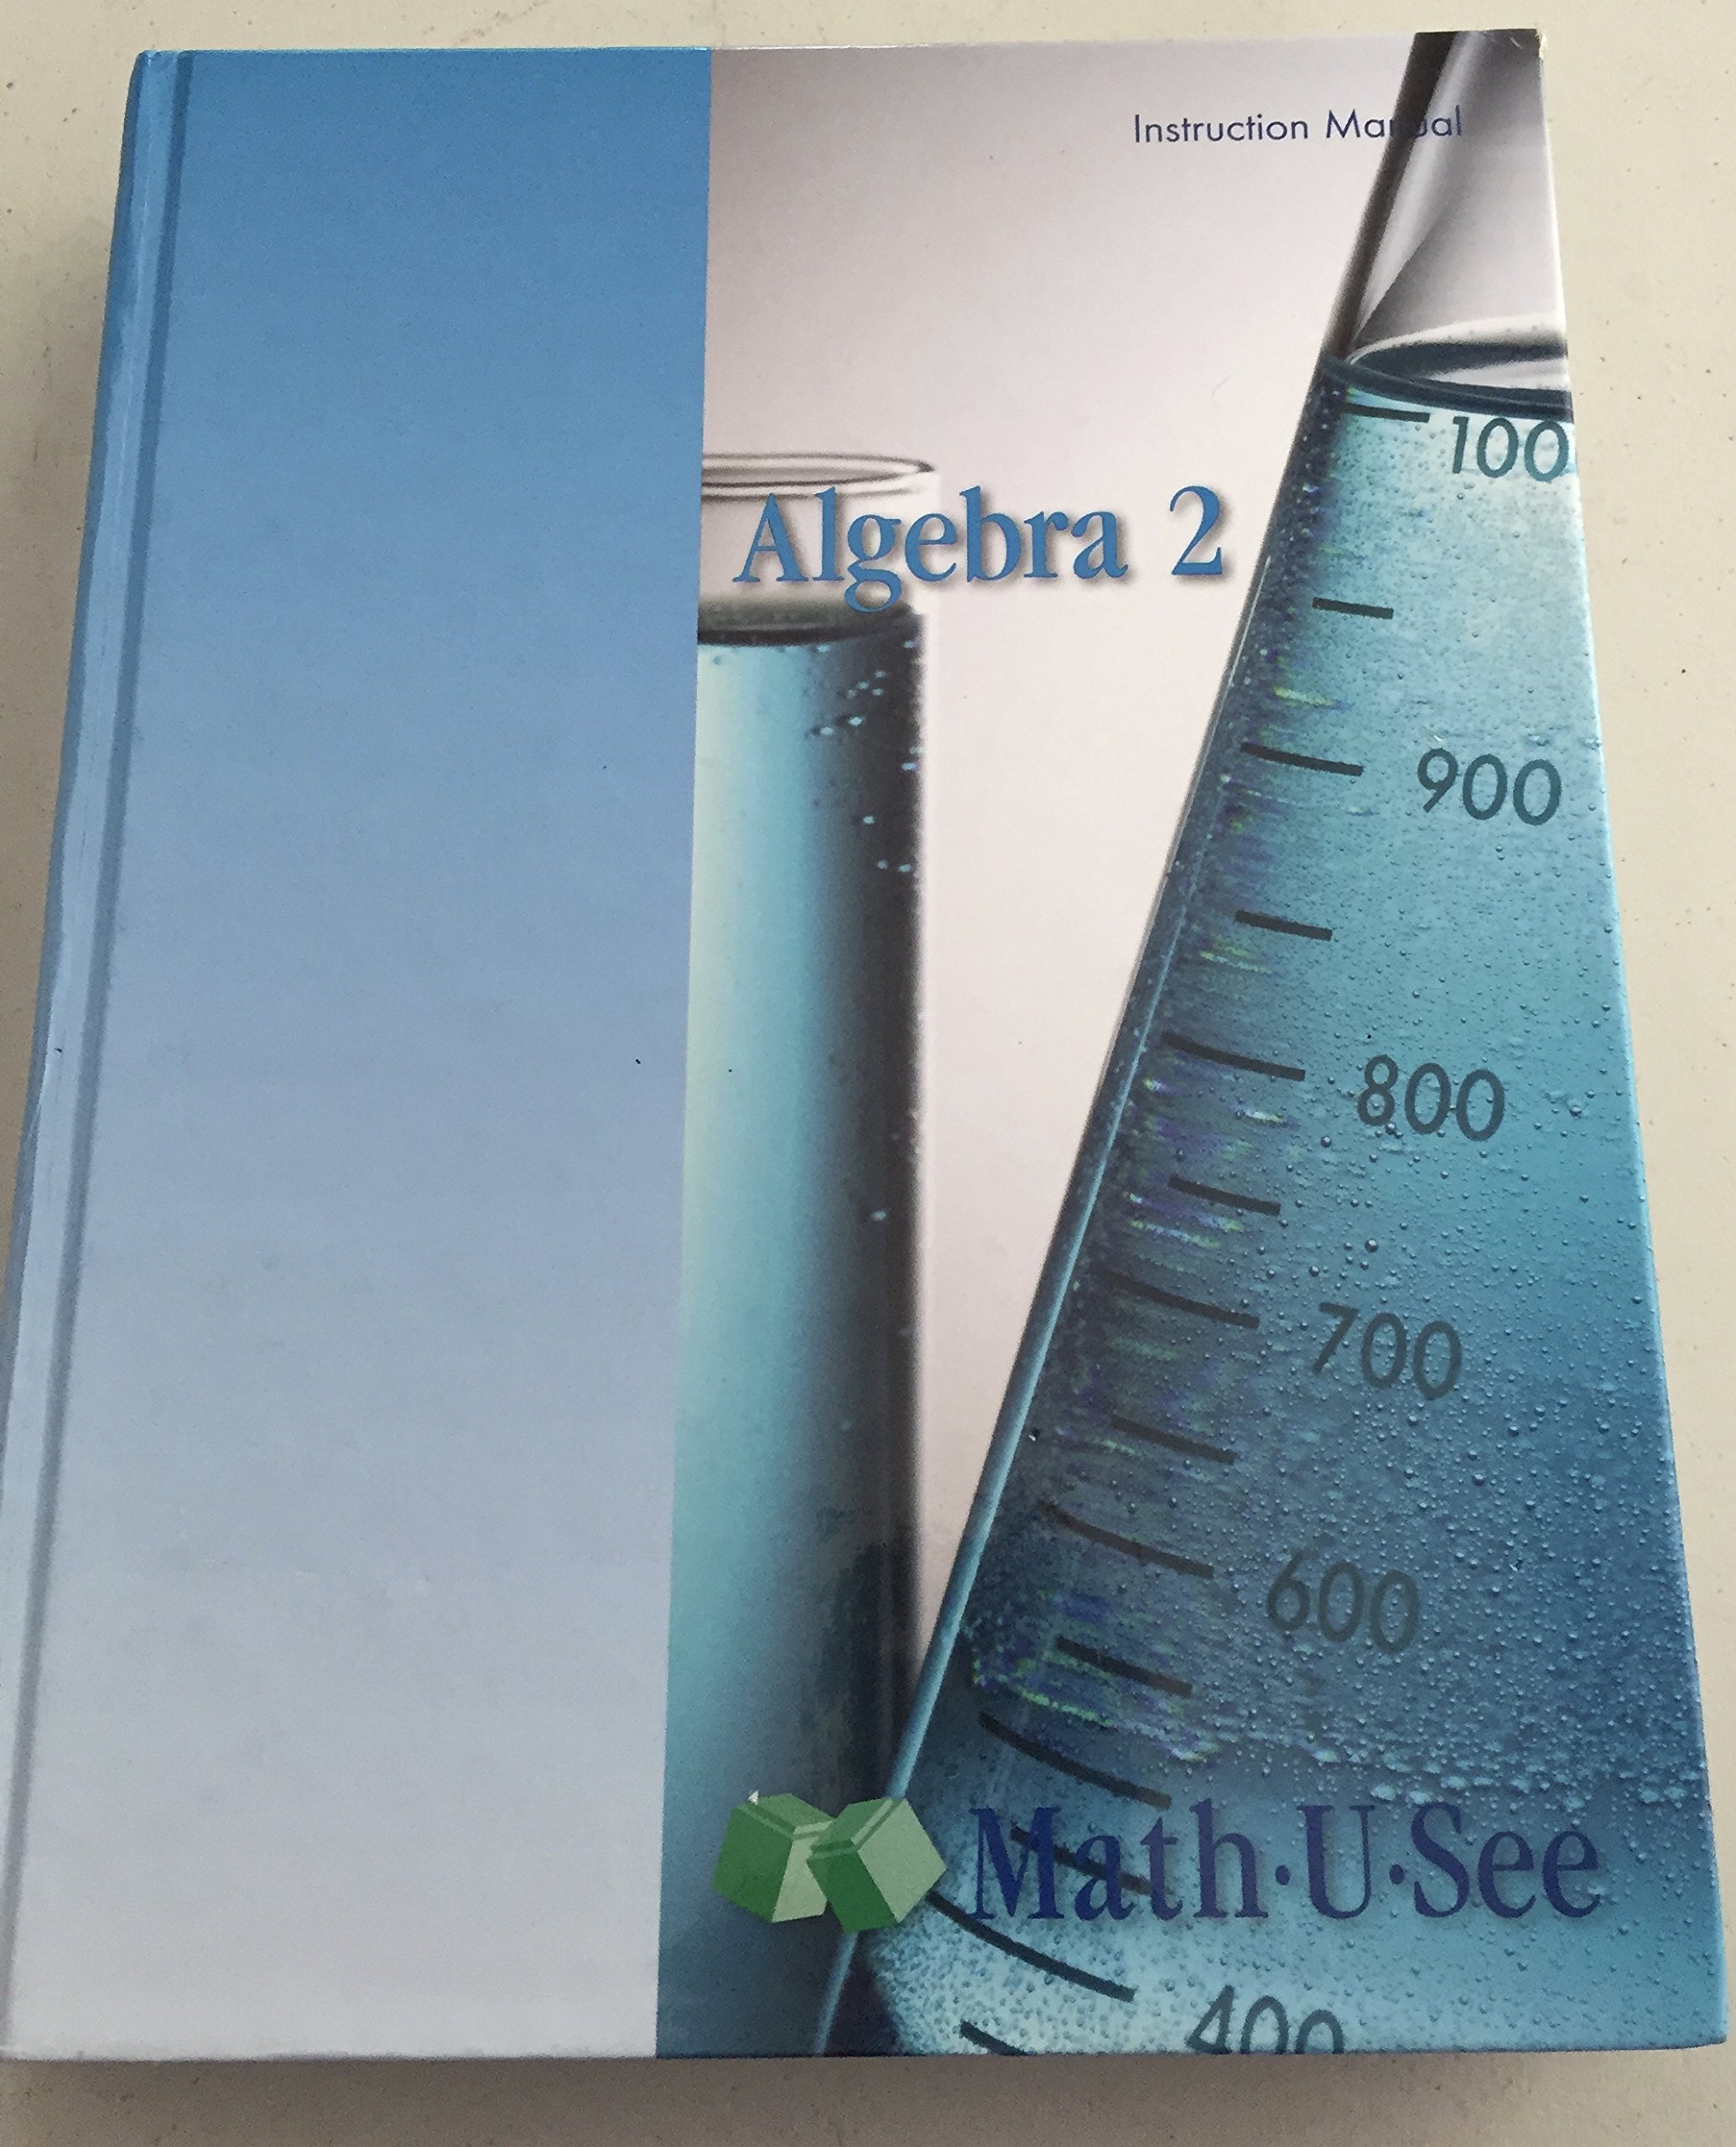 Algebra 2 Math-U-See Instruction Manual